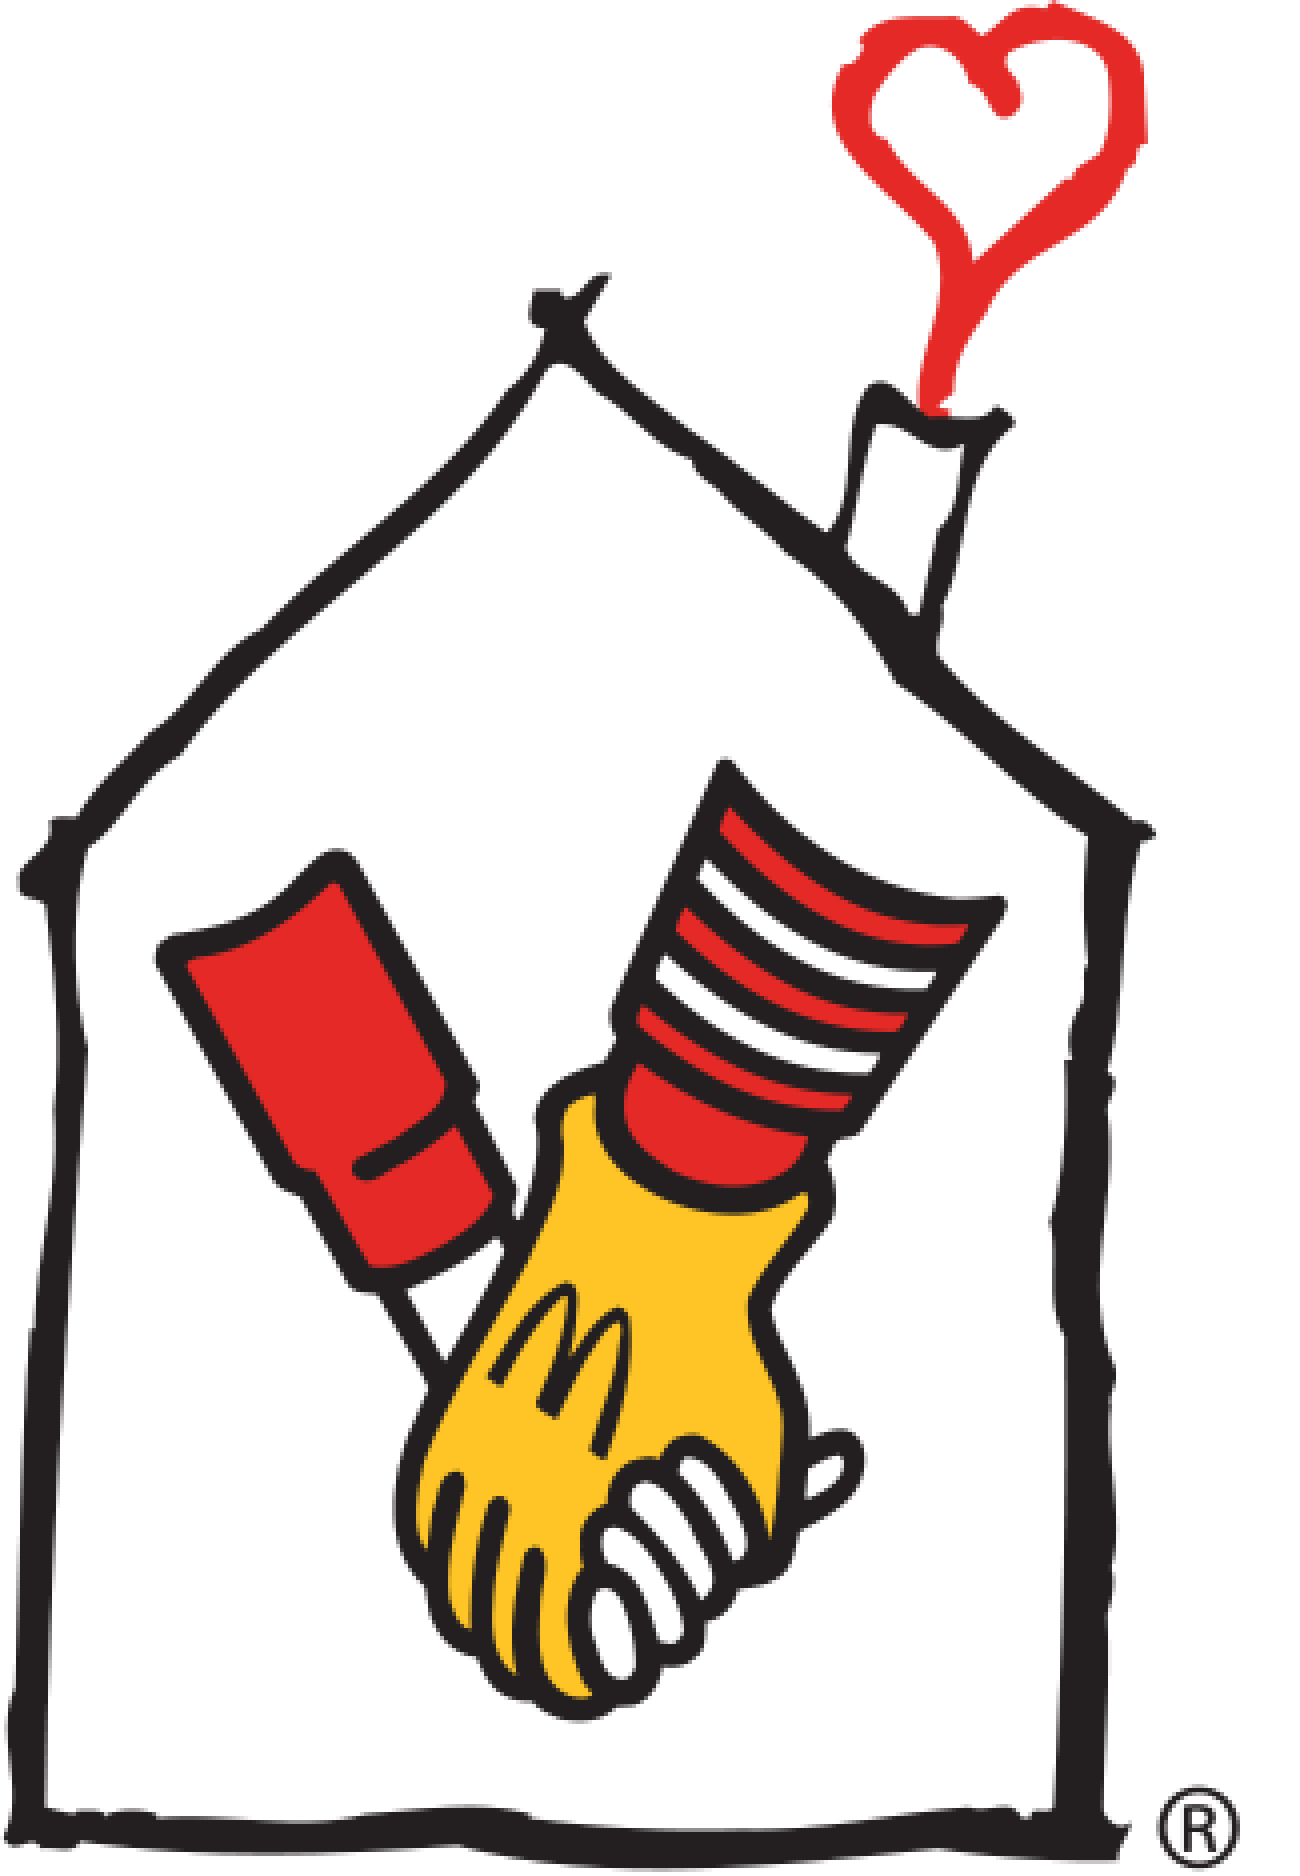 ronal mcdonald house logo